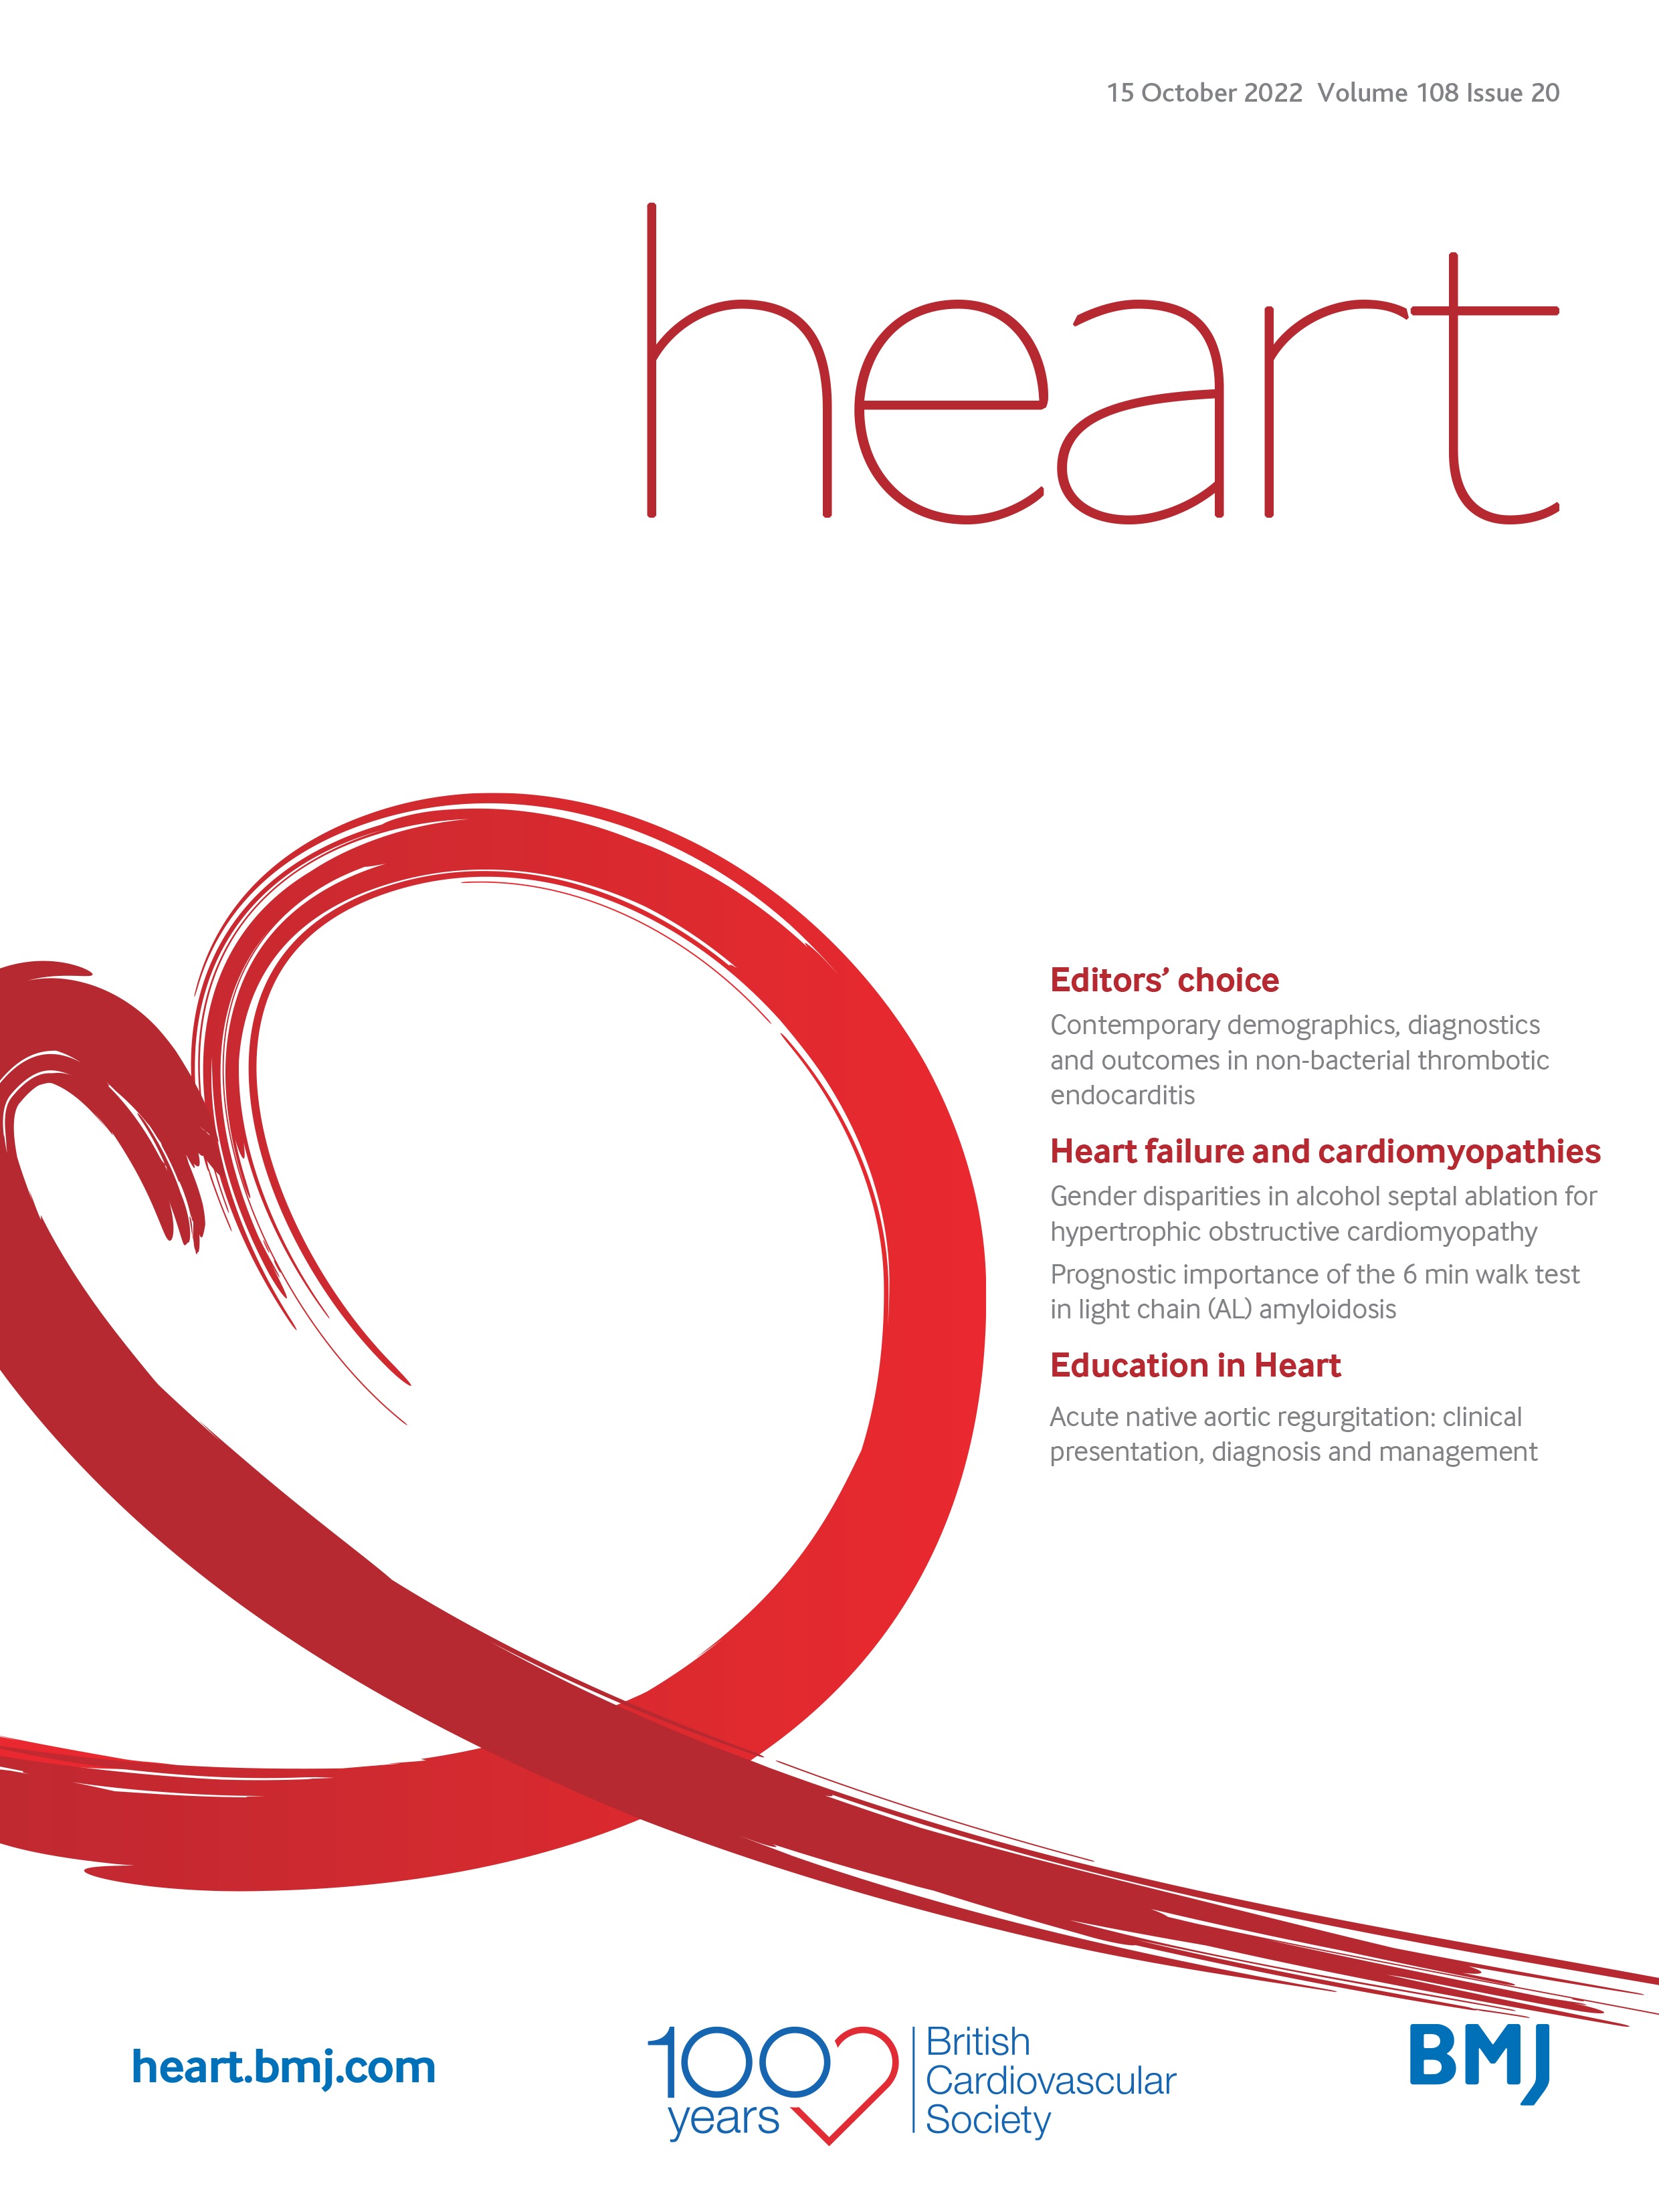 Acute native aortic regurgitation: clinical presentation, diagnosis and management